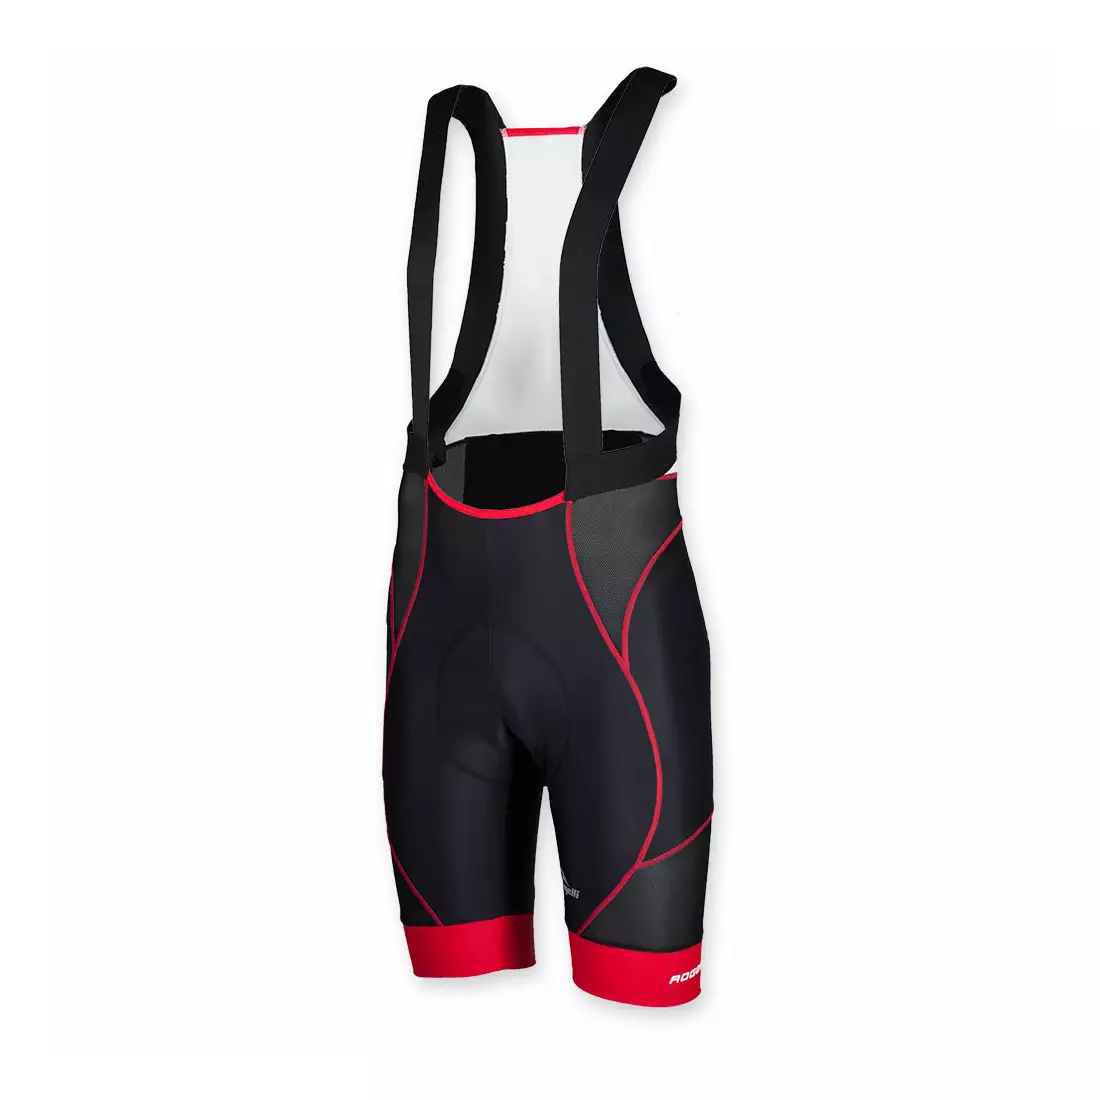 ROGELLI BIKE 002.448 PORRENA men's cycling shorts, suspender, color: black and red